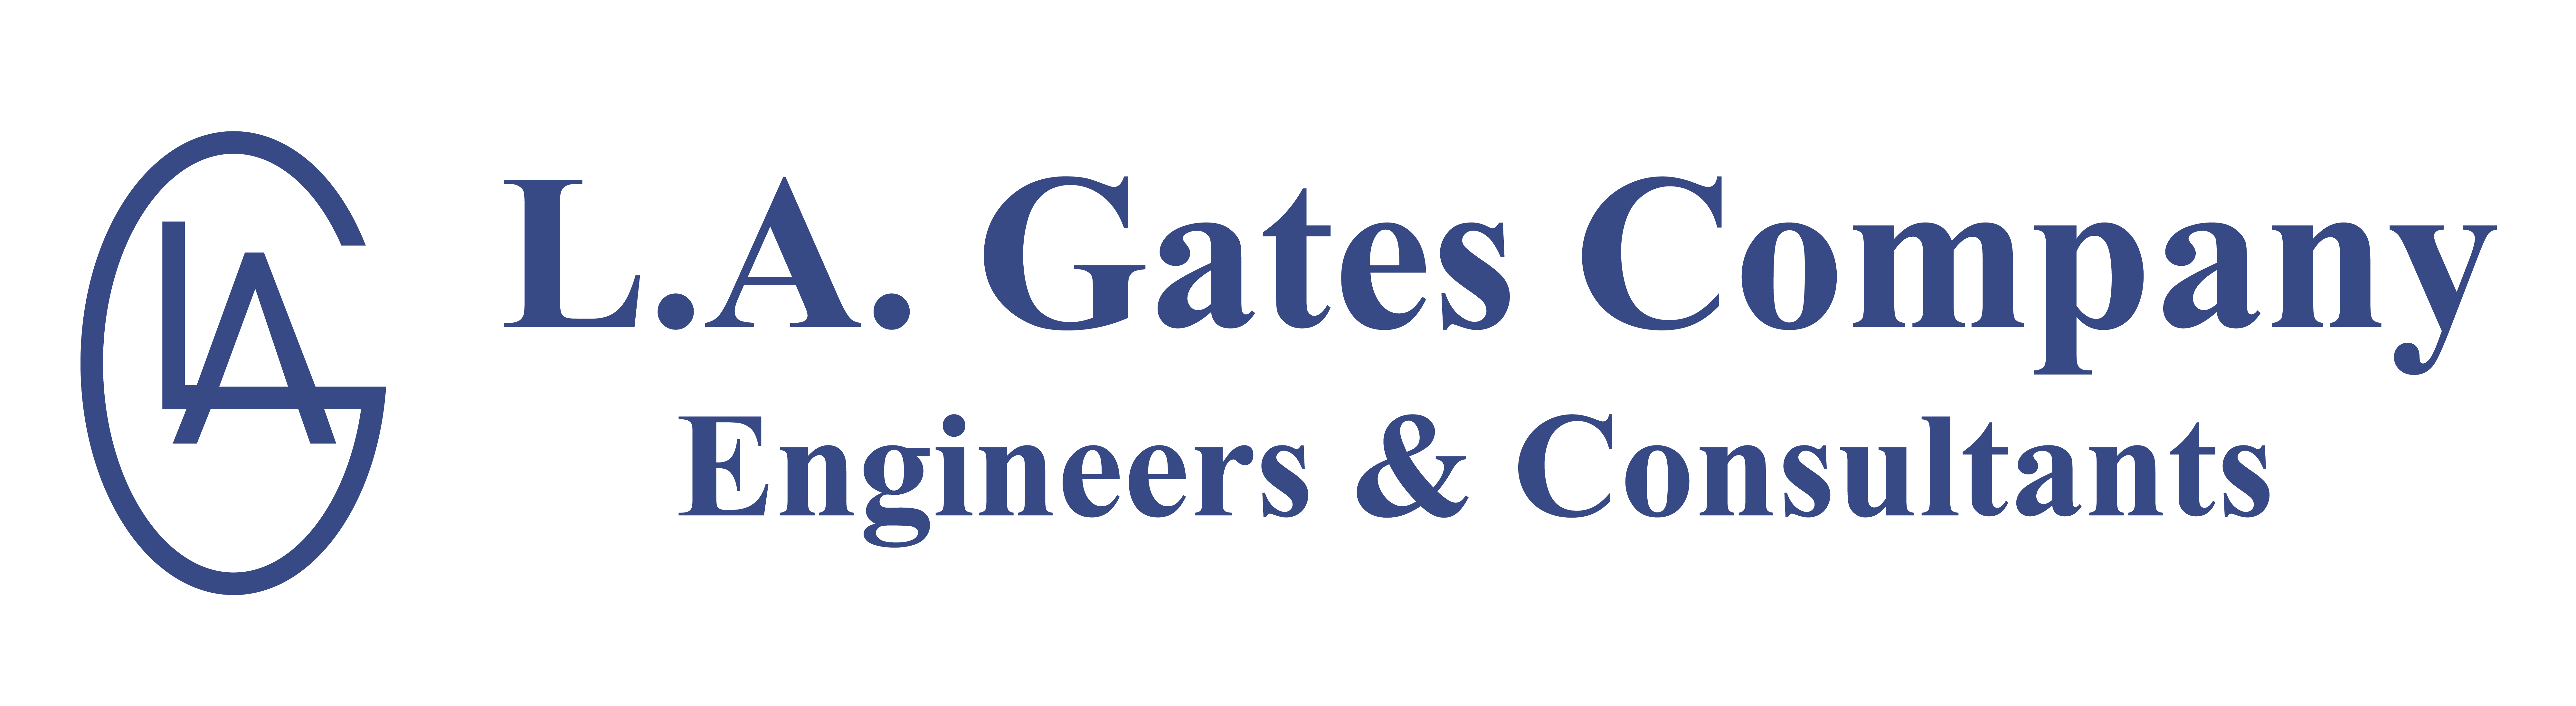 Home - L.A. Gates Company